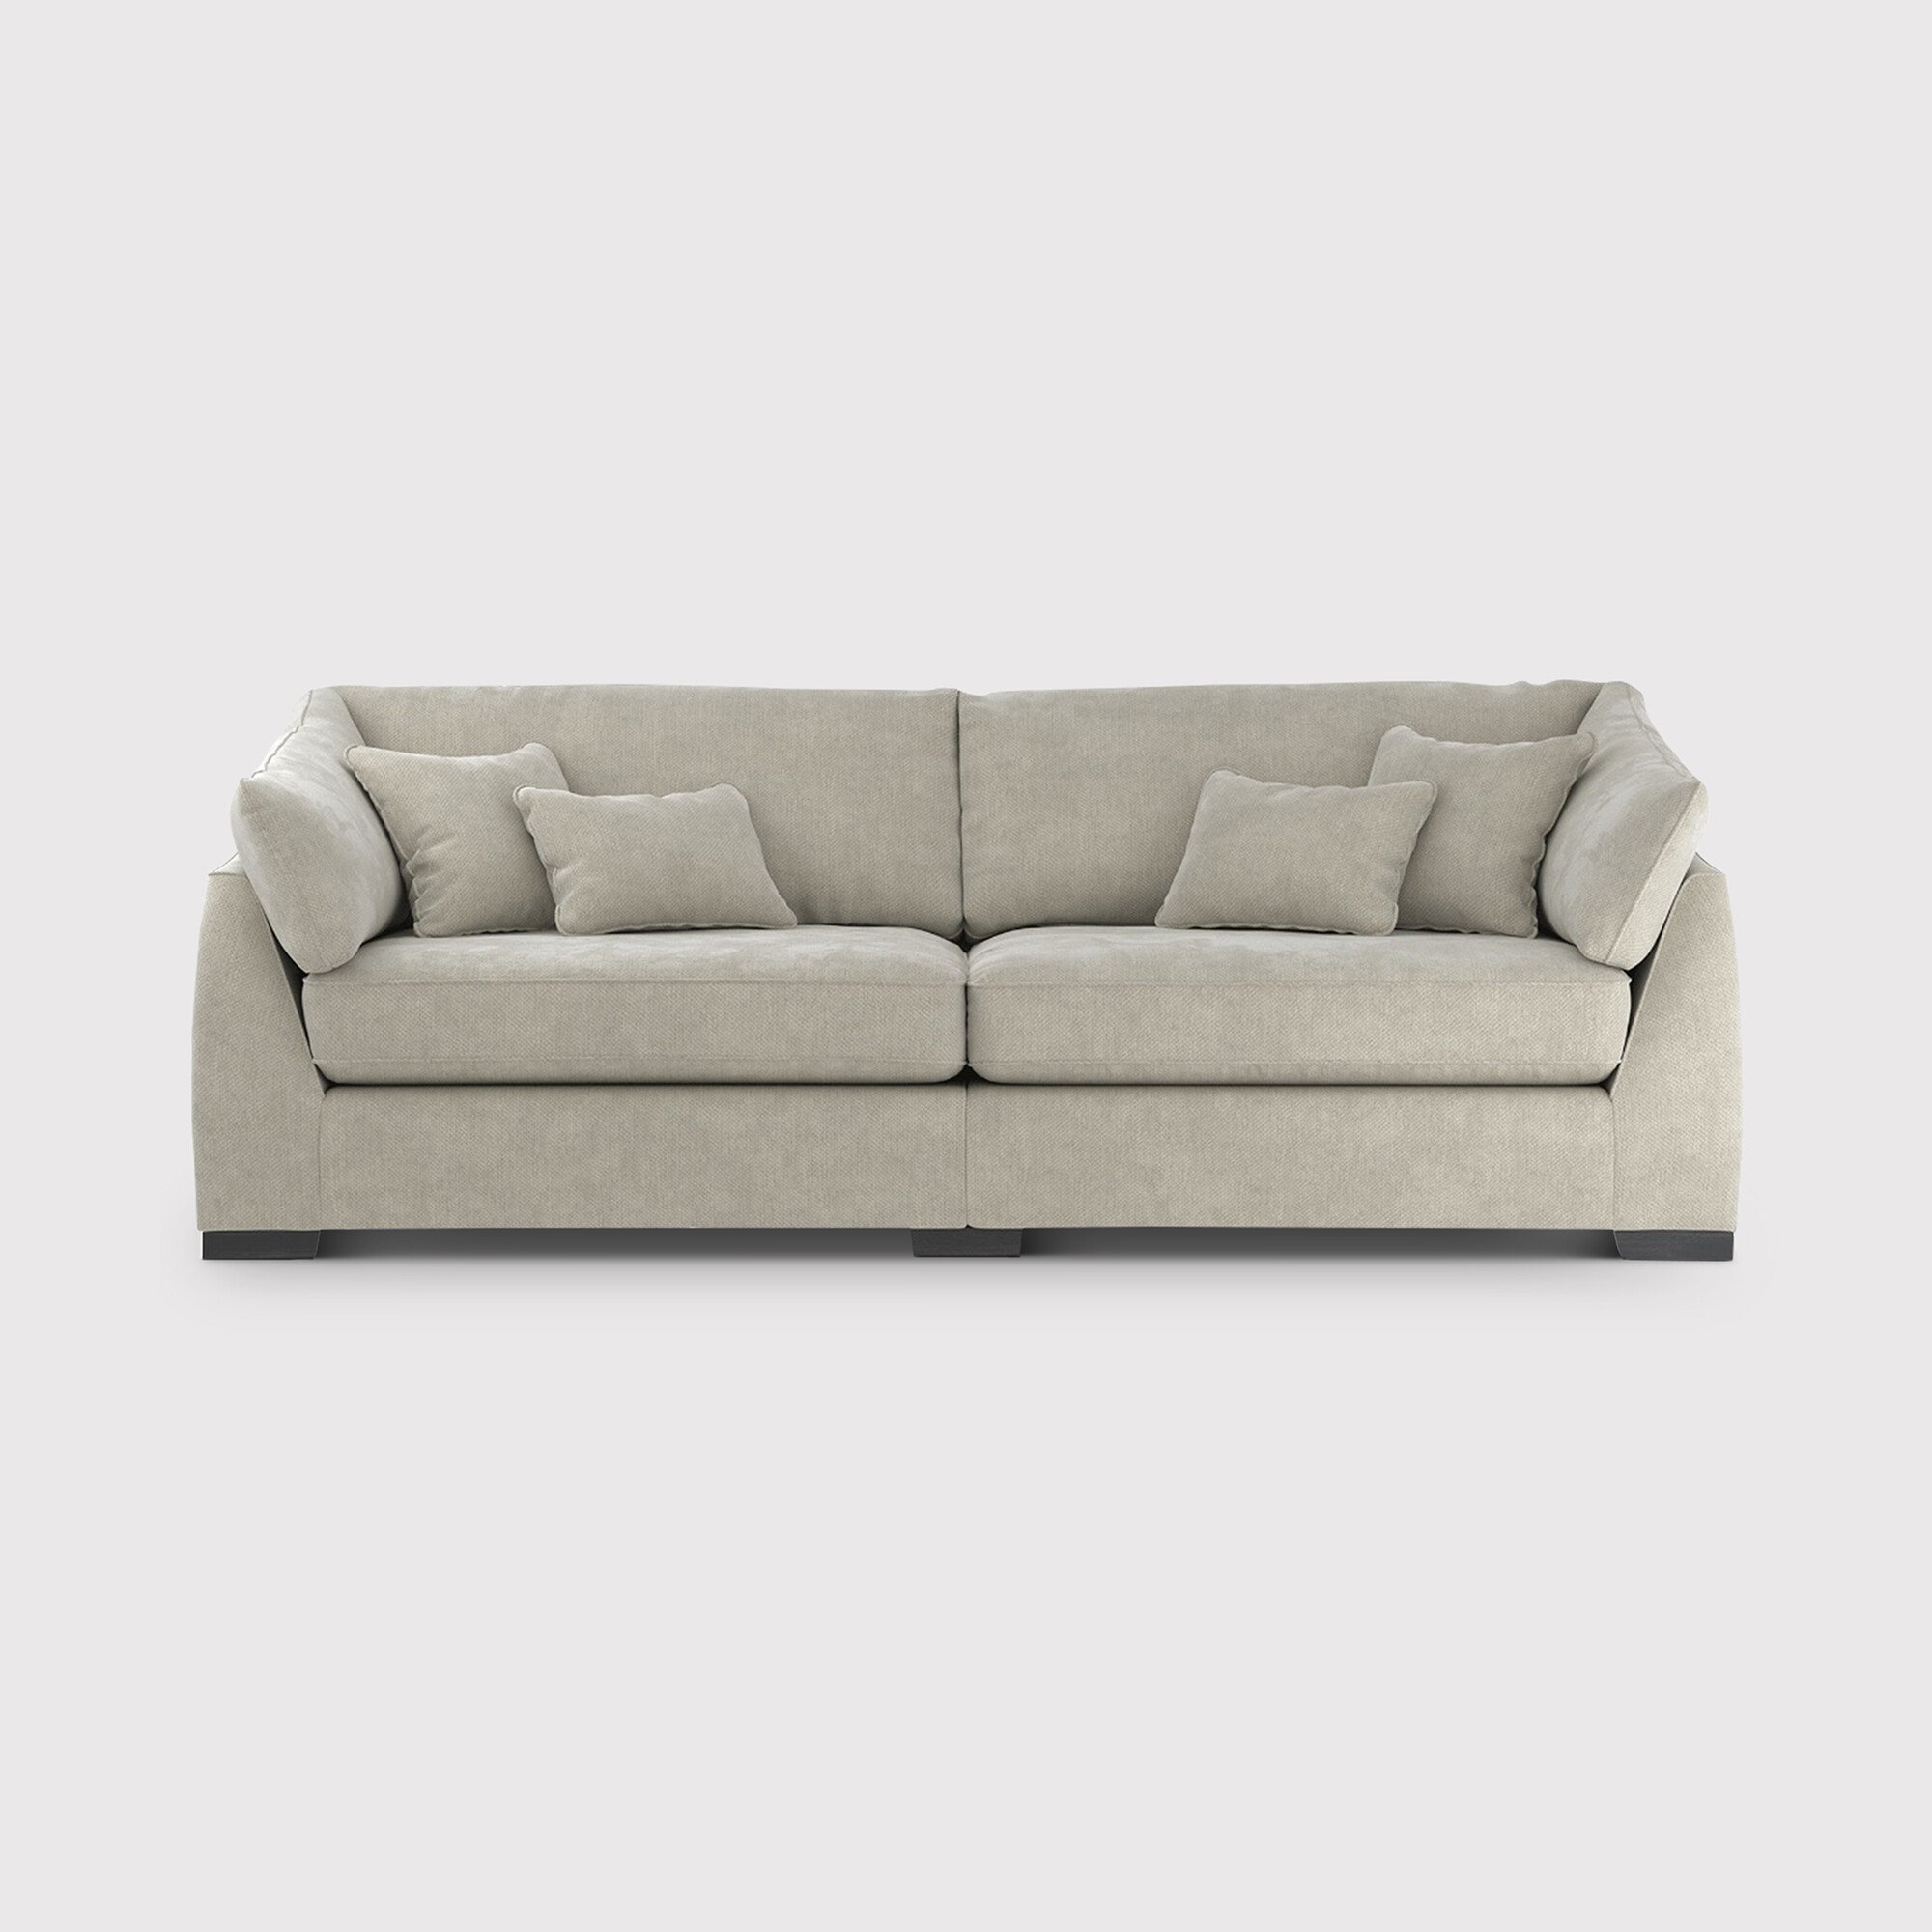 Borelly 4 Seater Sofa, Grey Fabric | Barker & Stonehouse